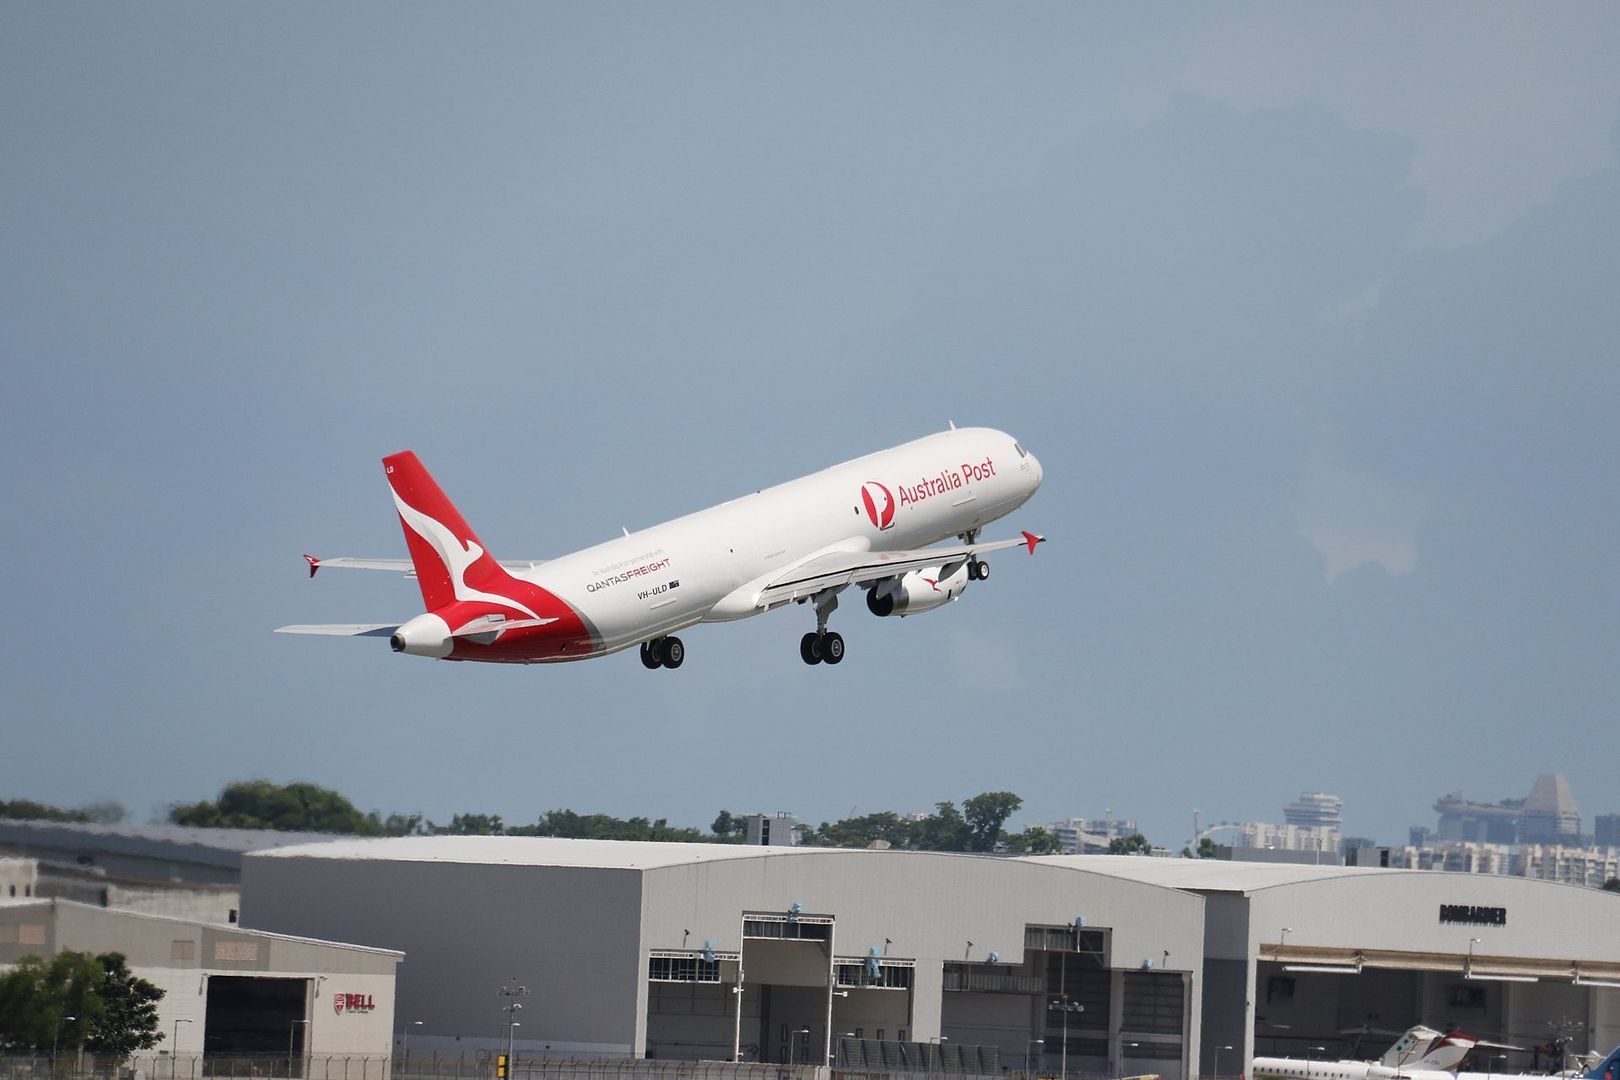 Qantas A321 P2f Enters Into Service